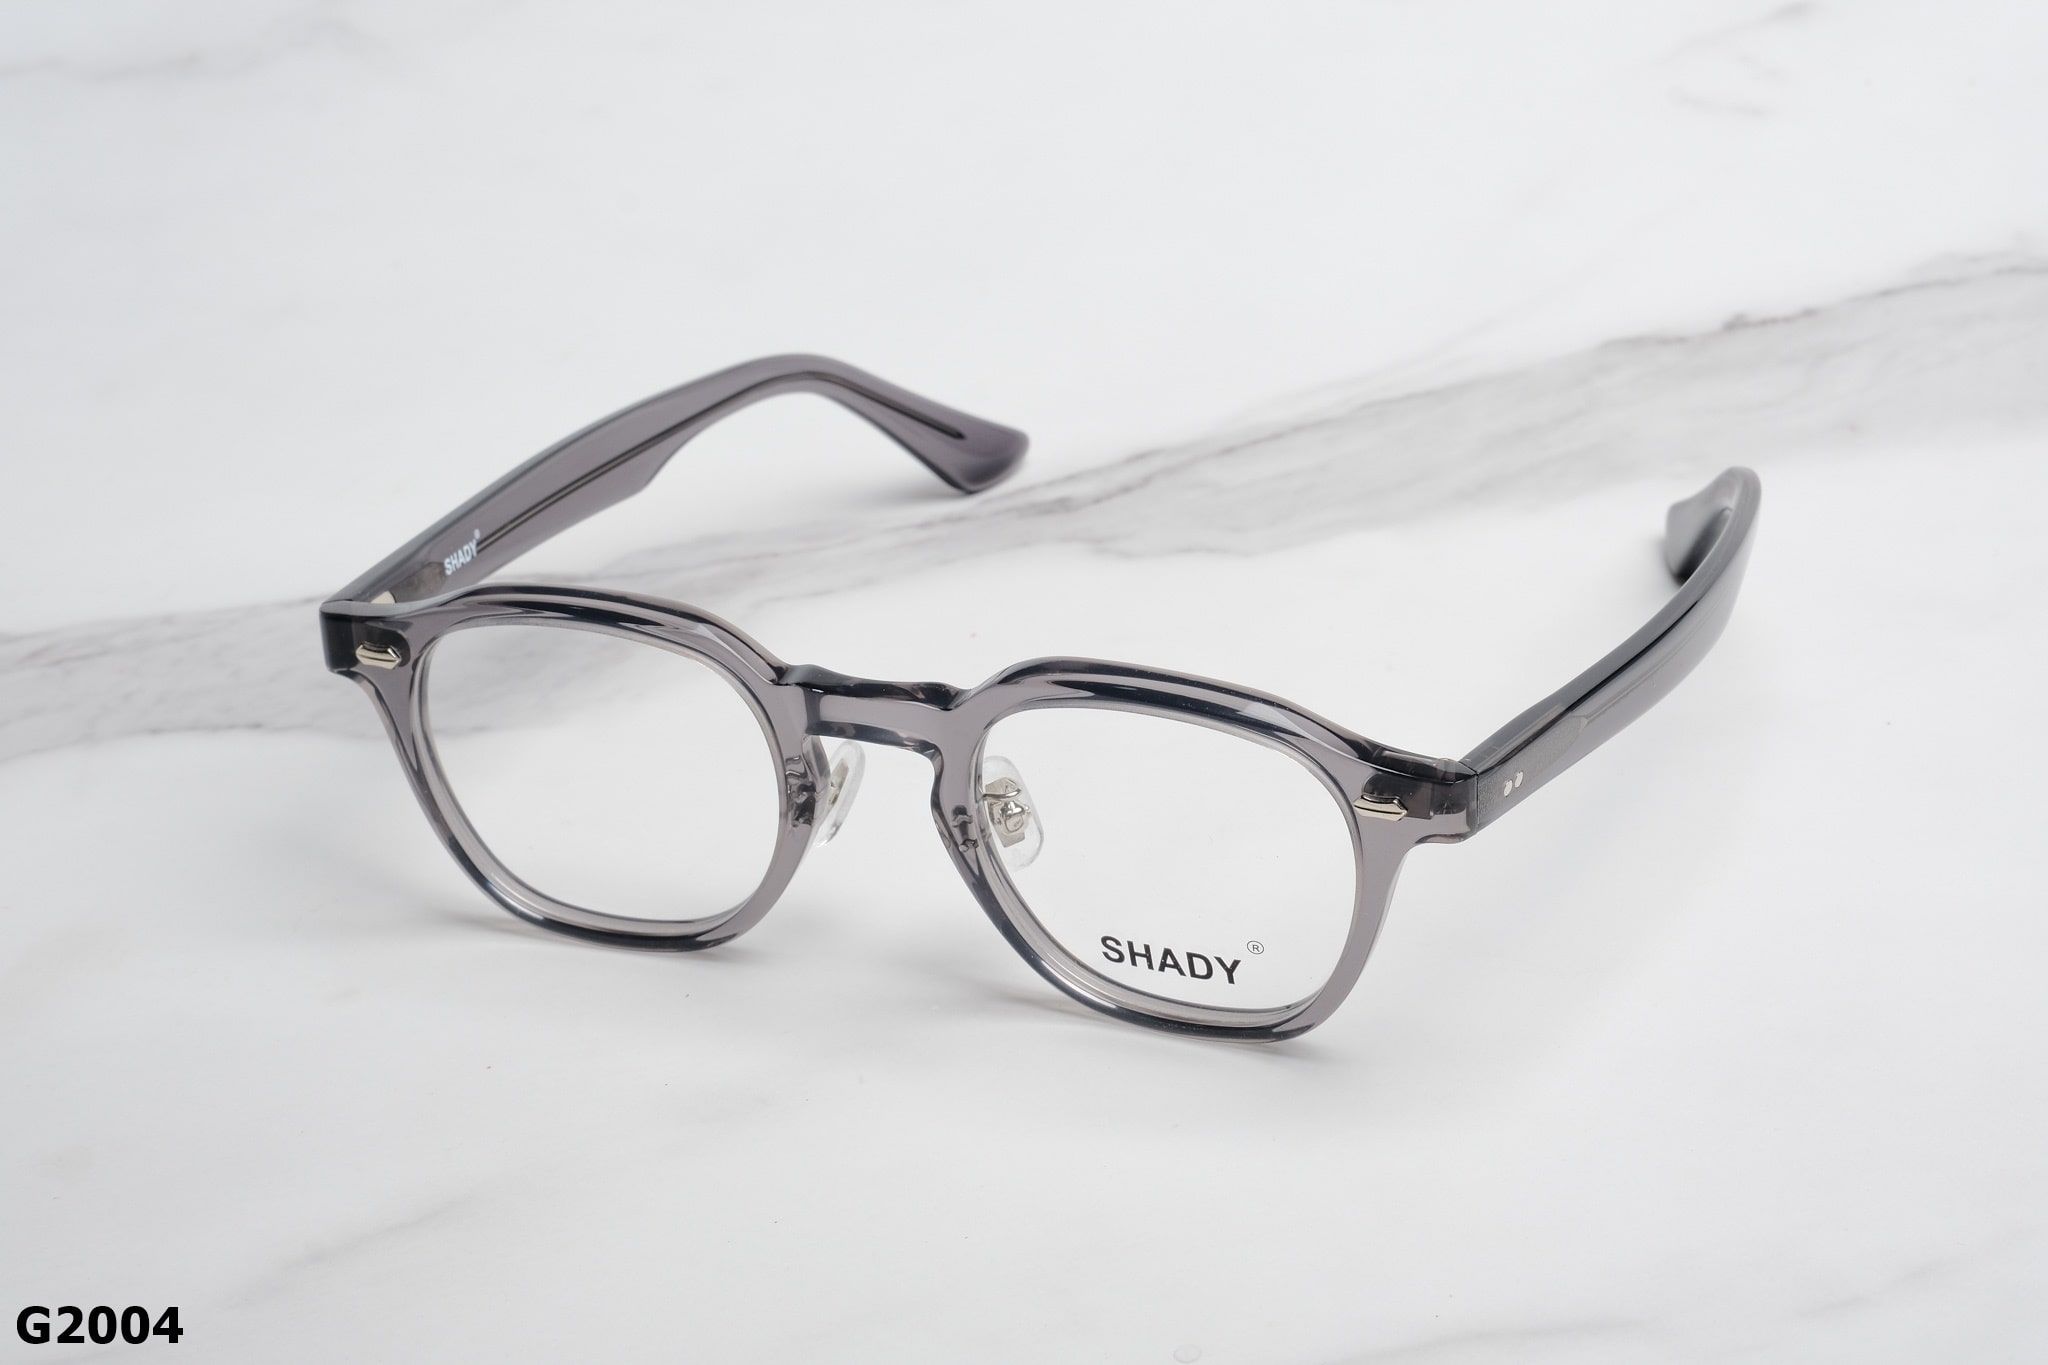  SHADY Eyewear - Glasses - G2004 